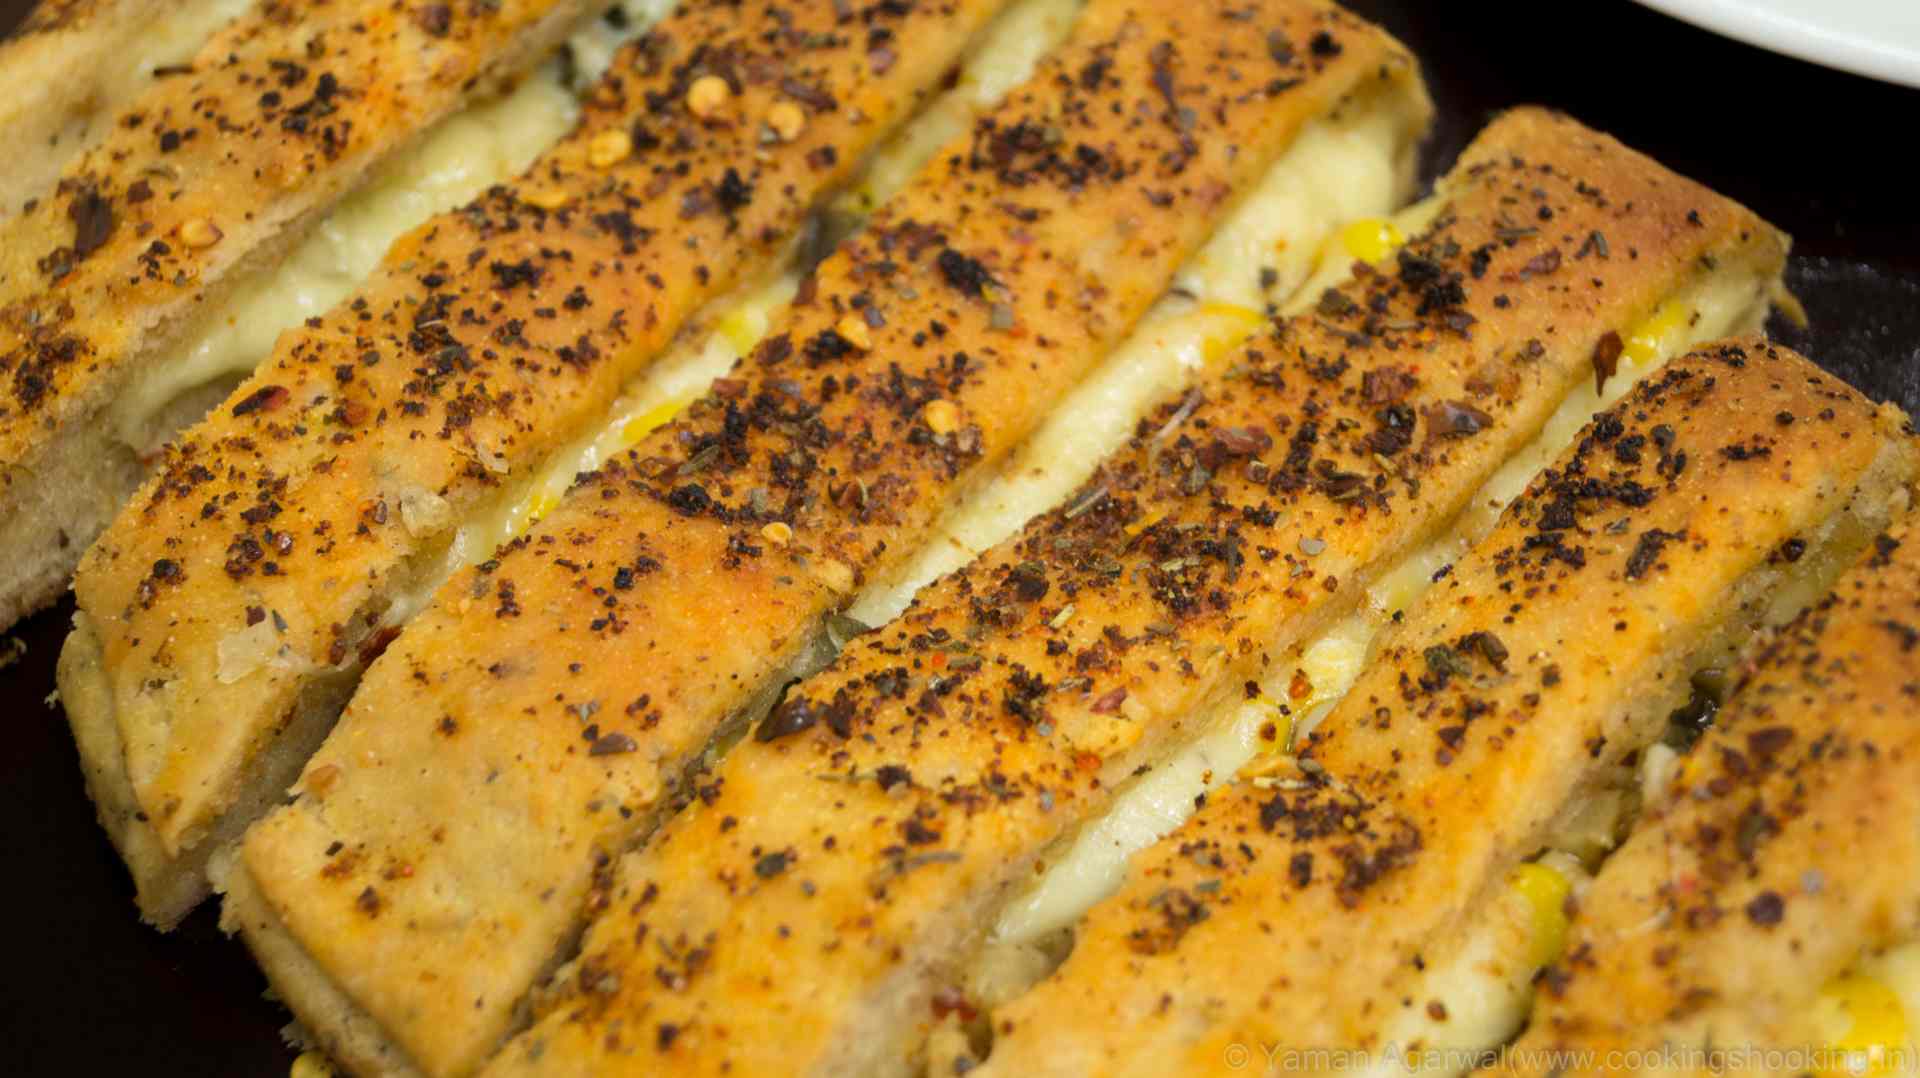 Cheesy Garlic Bread Sticks / Cheese and Corn Stuffed Garlic Bread Sticks